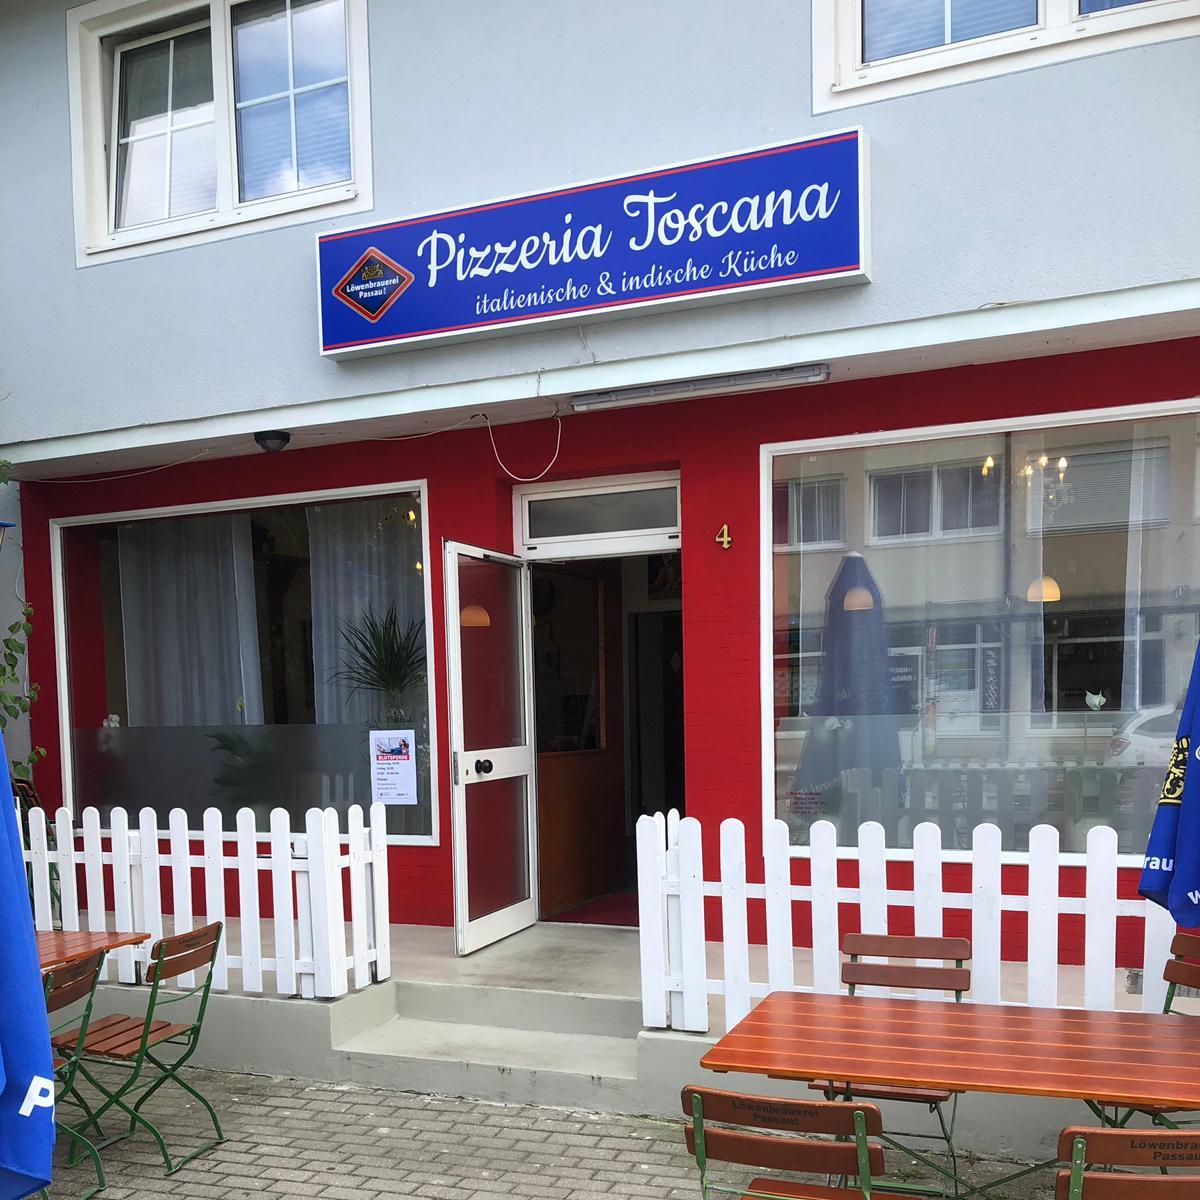 Restaurant "Pizzeria Toscana" in Neuburg am Inn